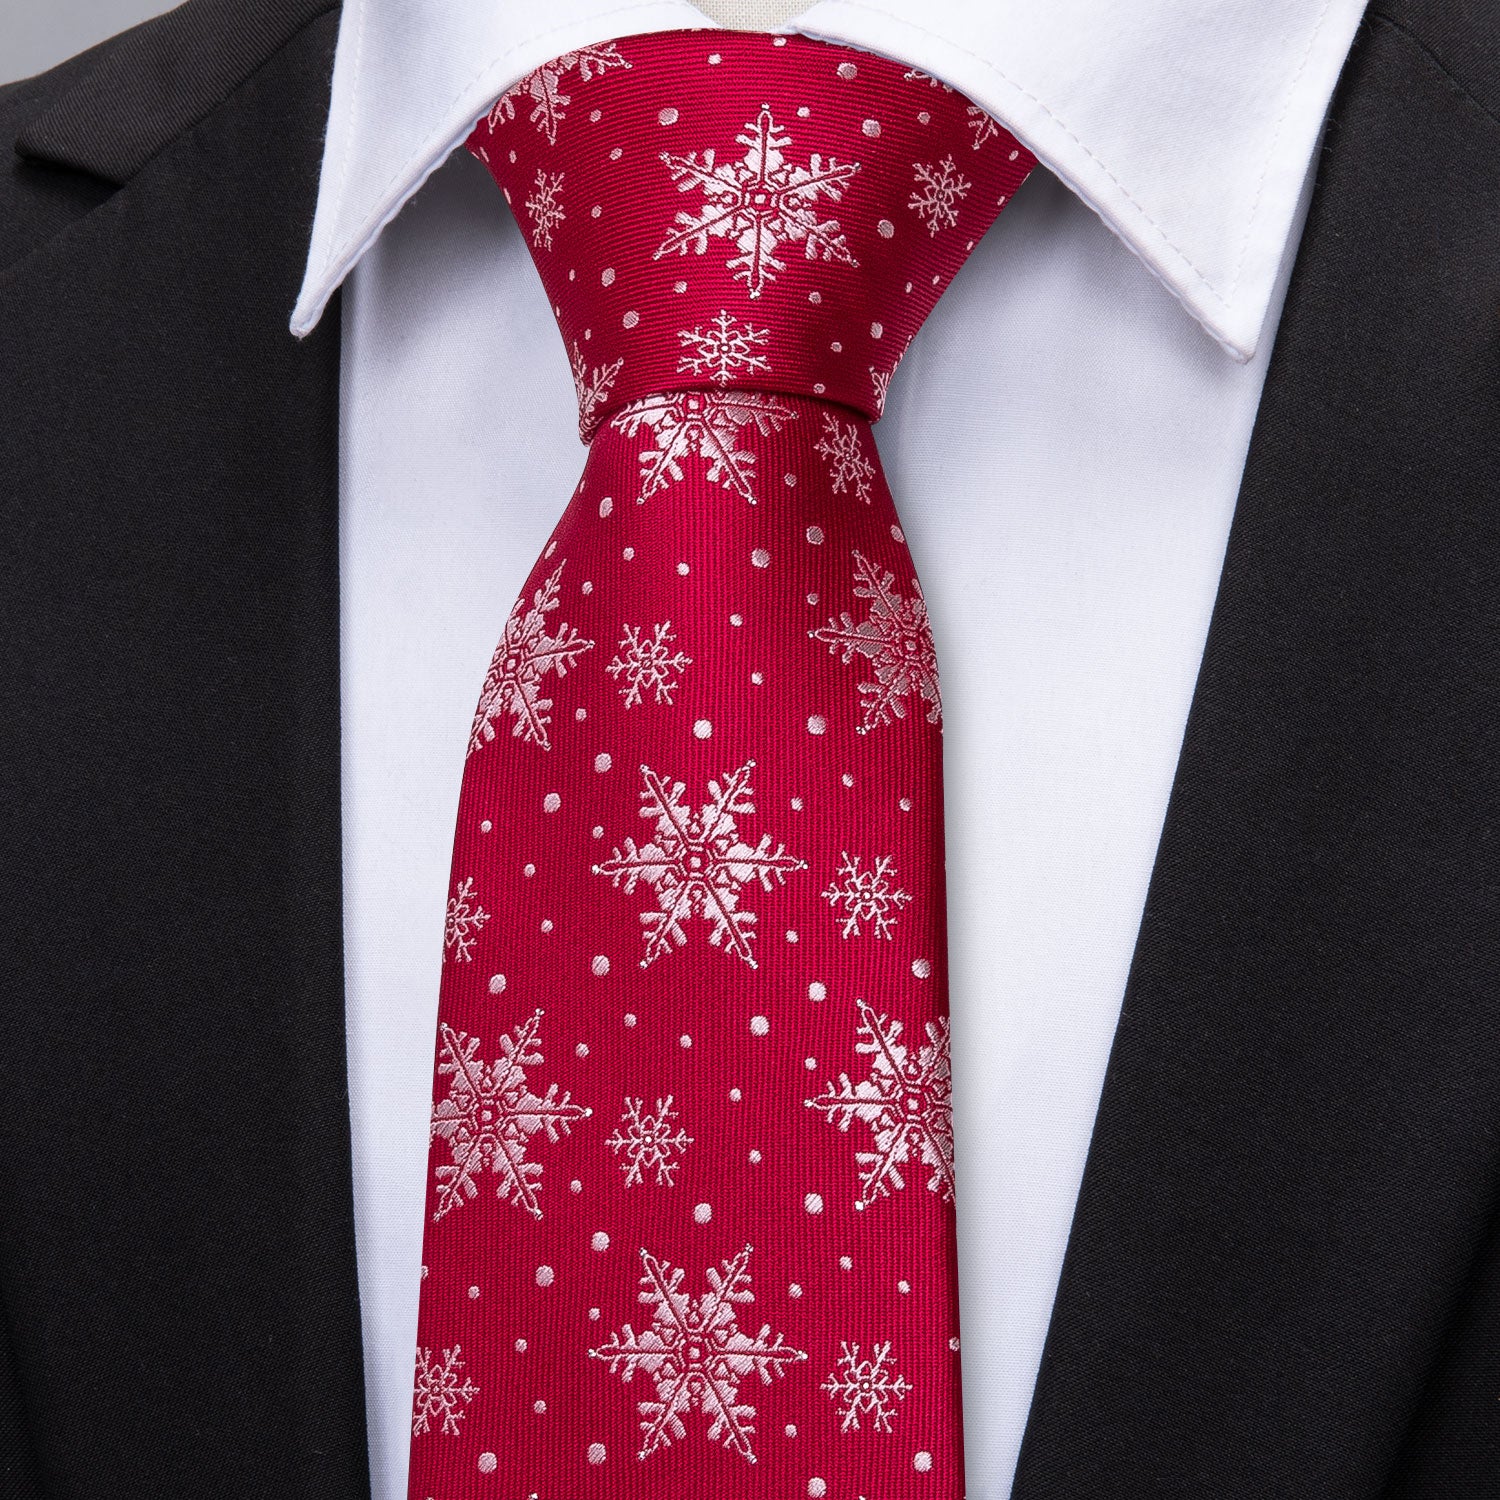 Barry.wang Christmas Tie Red White Snowflake Silk Men's Tie Pocket Square Cufflinks Set